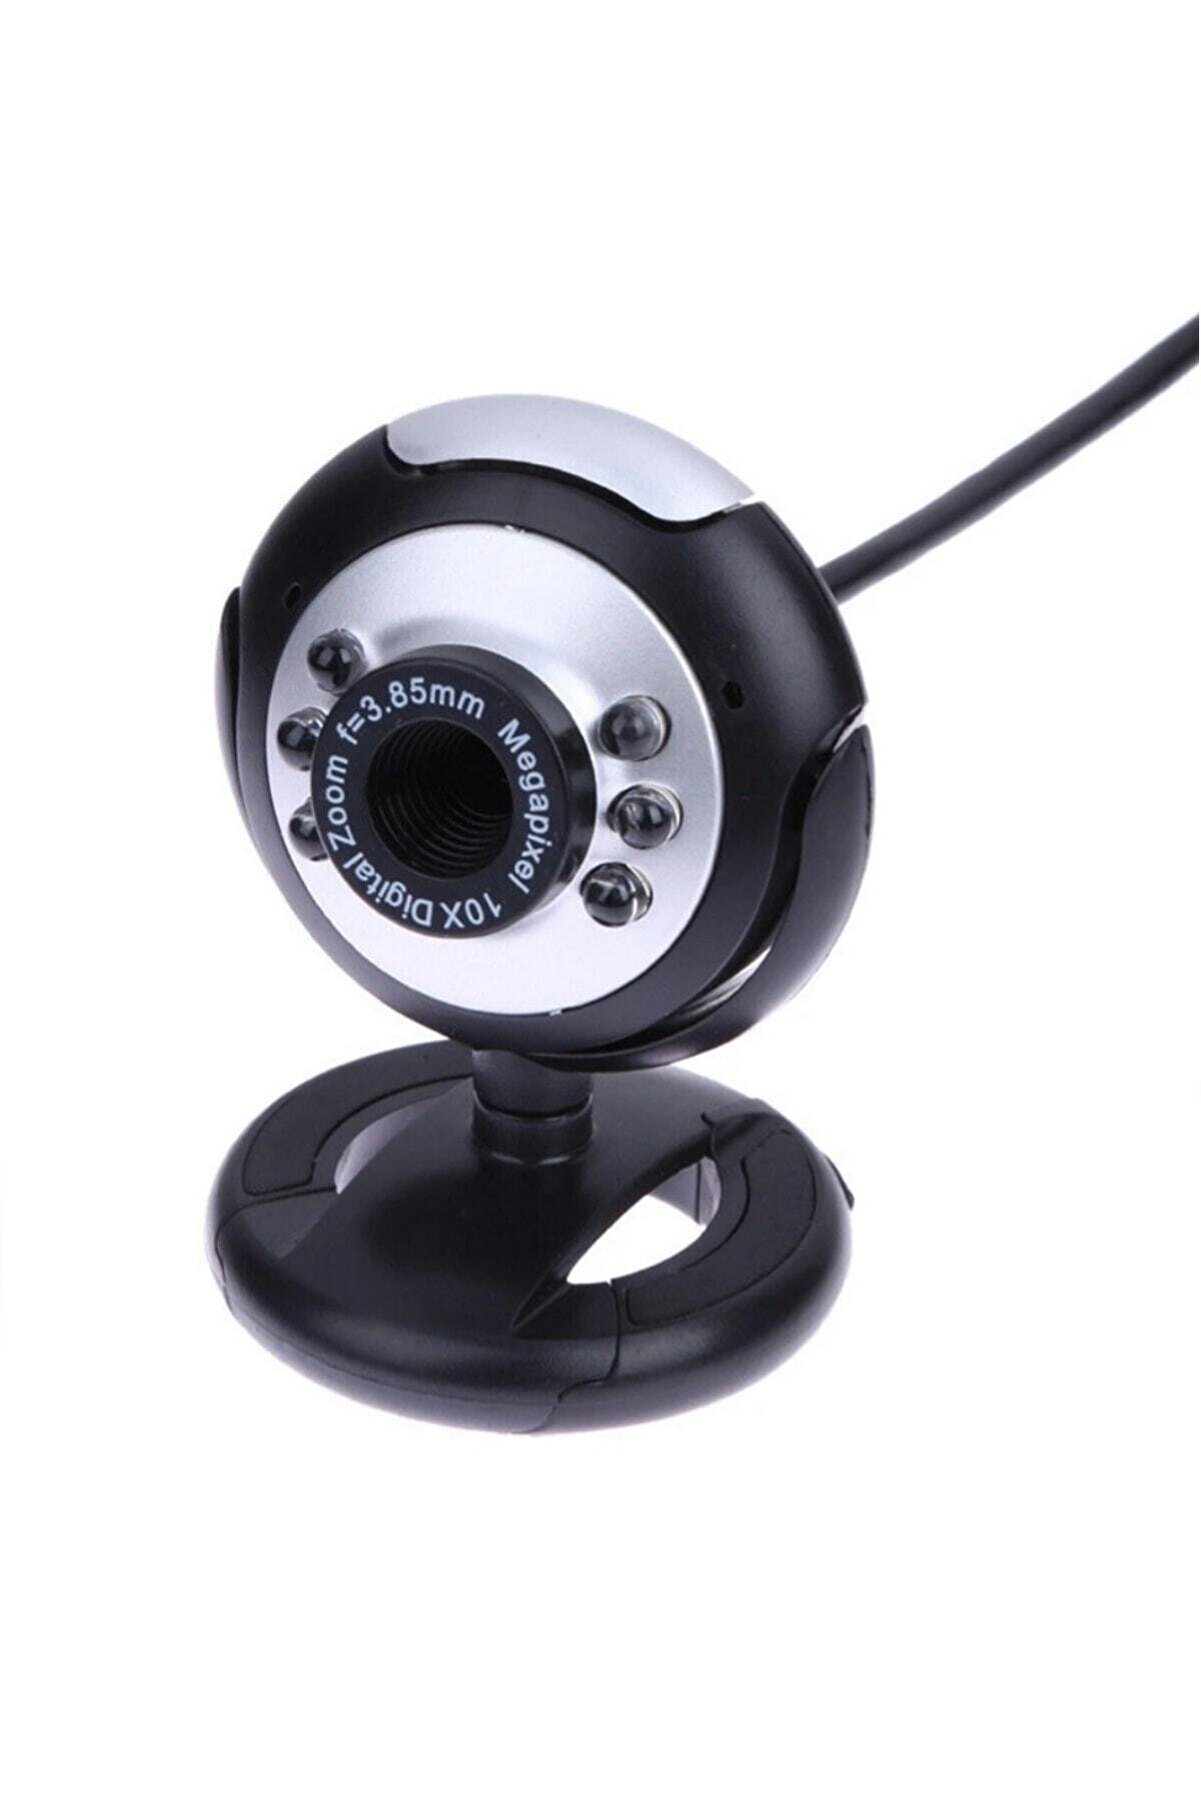 Apprise Hd Video Mikrofon Webcam Web Kamera